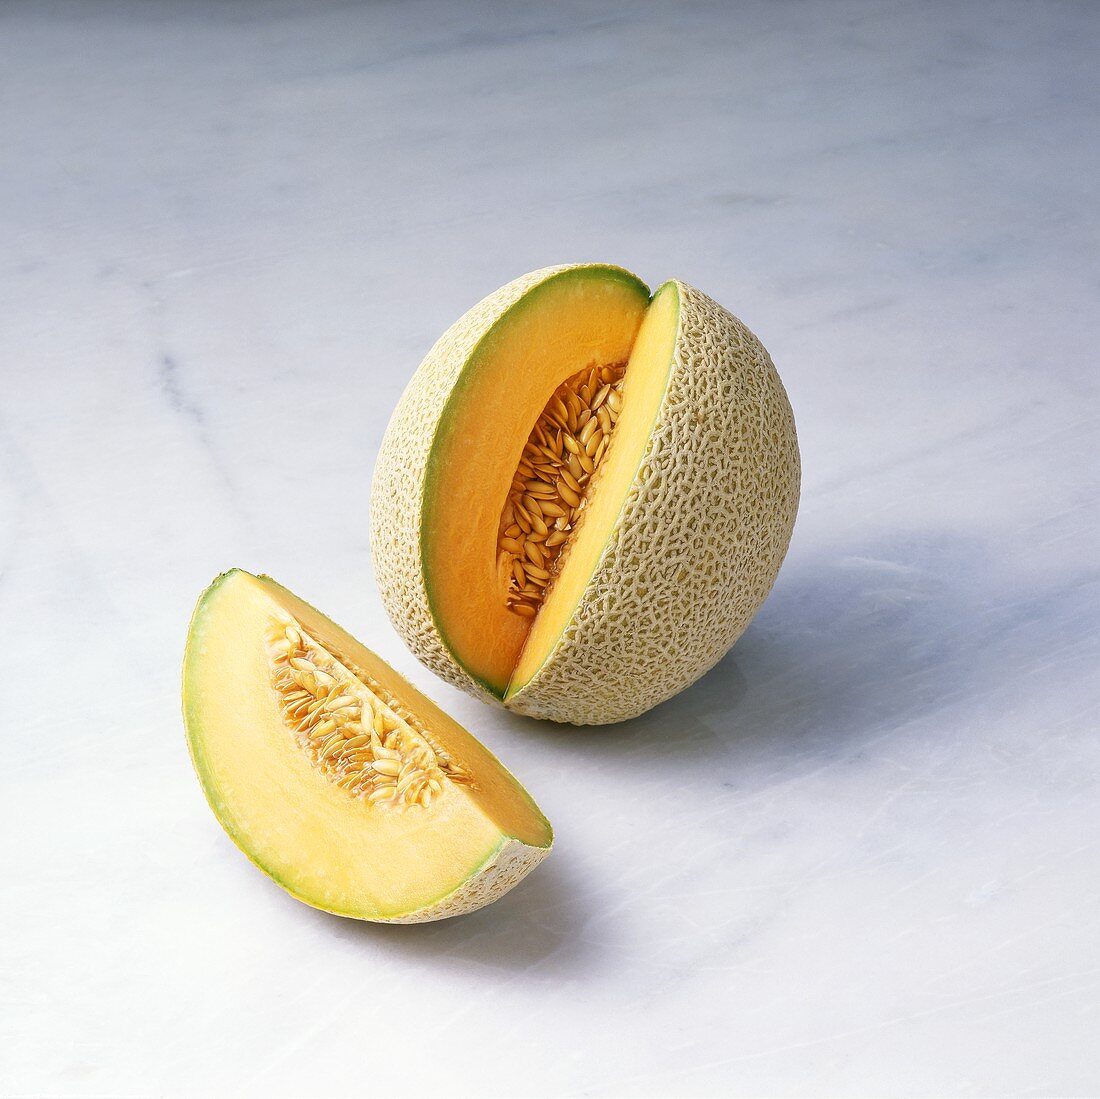 Cantaloupe Melone; angeschnitten